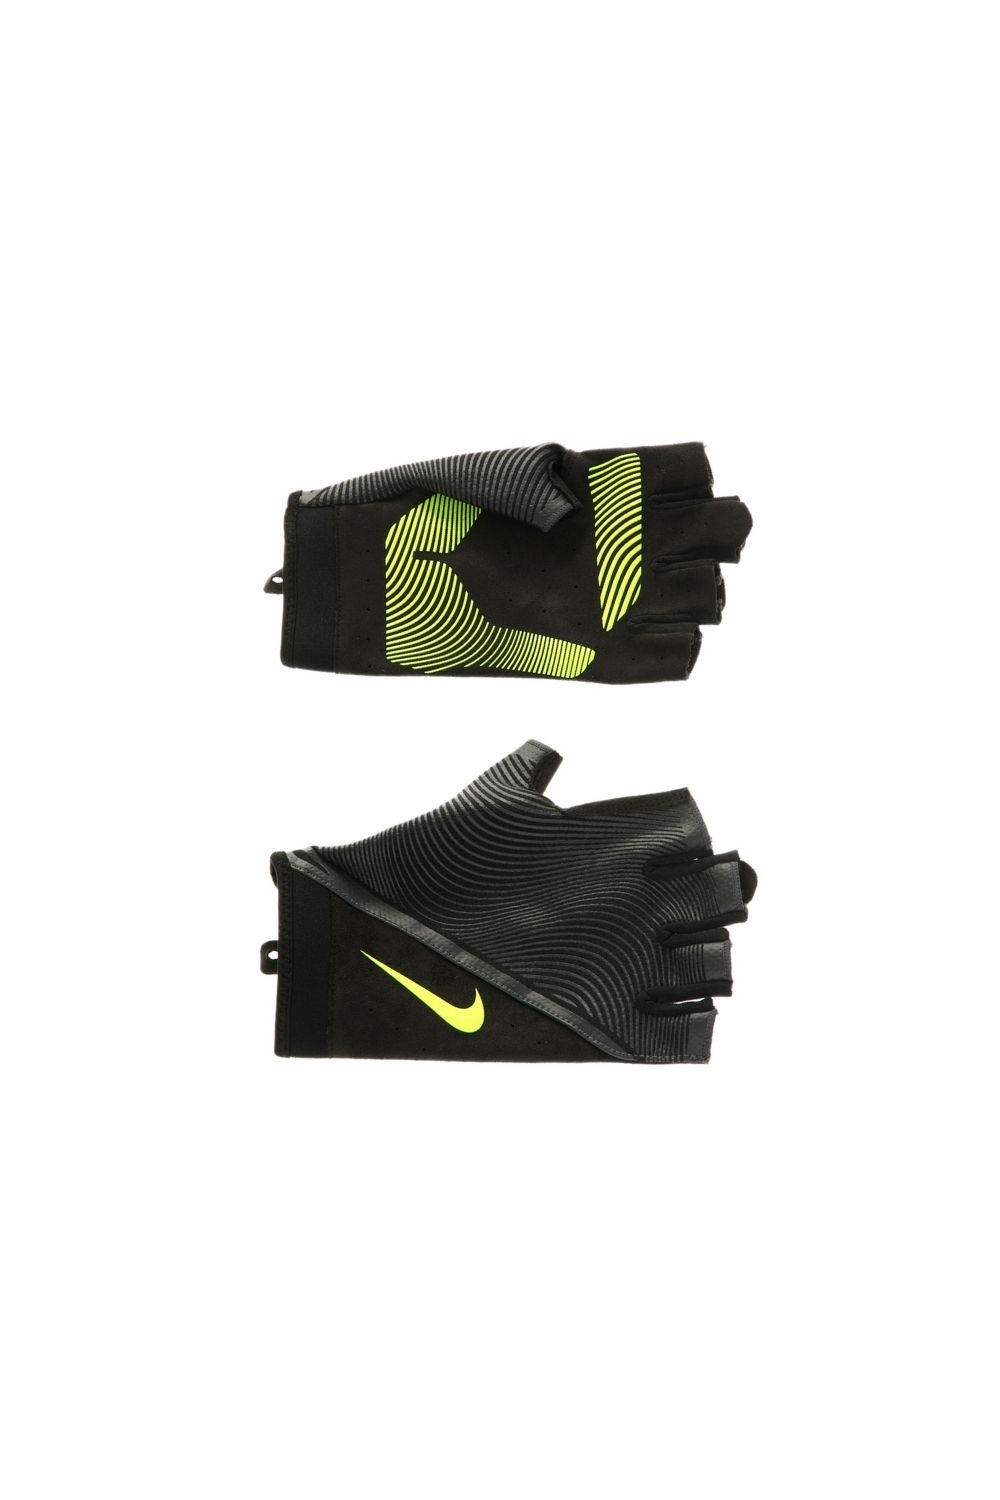 NIKE - Ανδρικά γάντια προπόνησης NIKE MEN'S HAVOC TRAINING μαύρα Ανδρικά/Αξεσουάρ/Αθλητικά Είδη/Εξοπλισμός